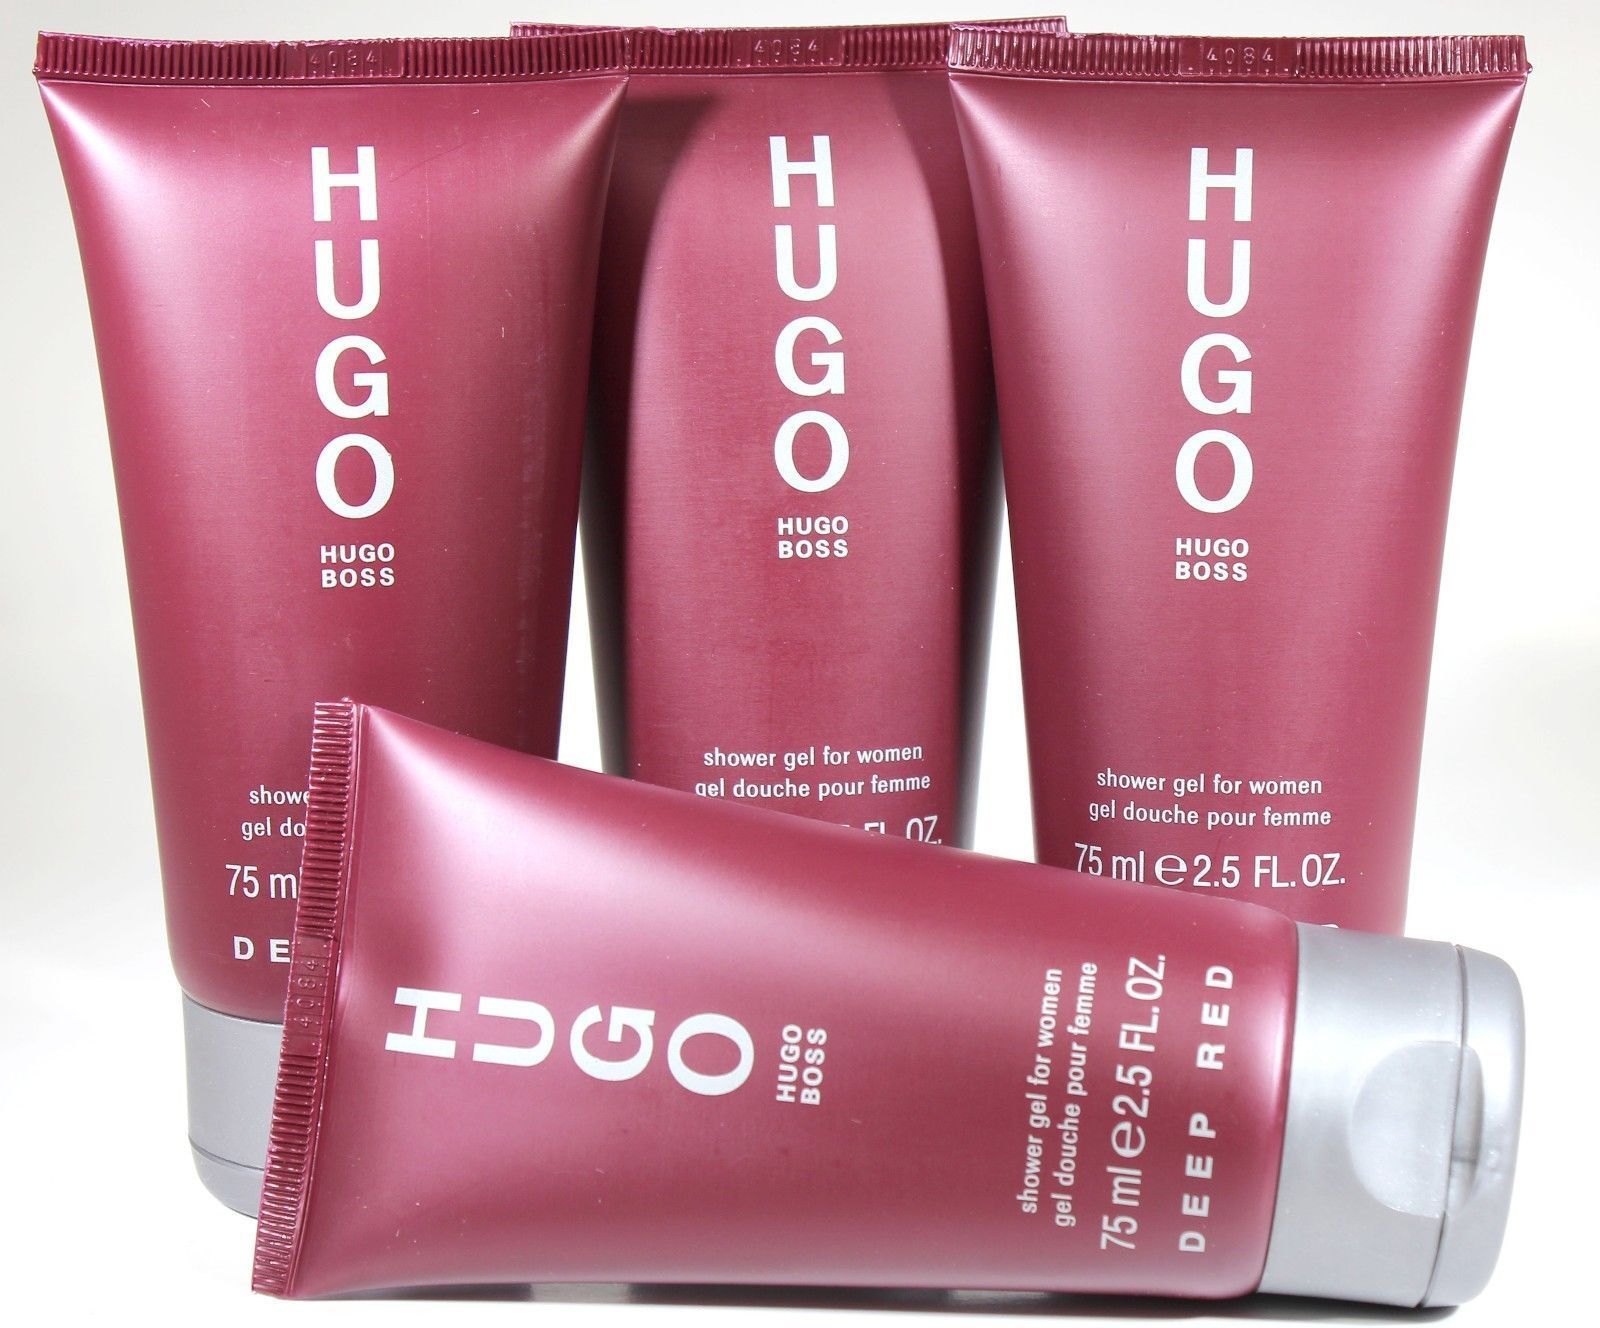 Doe mee Reinig de vloer opening 4 Pieces Hugo Boss Deep Red 2.5/2.6 oz Shower Gel for Women New - Unboxed  101234332001 | eBay